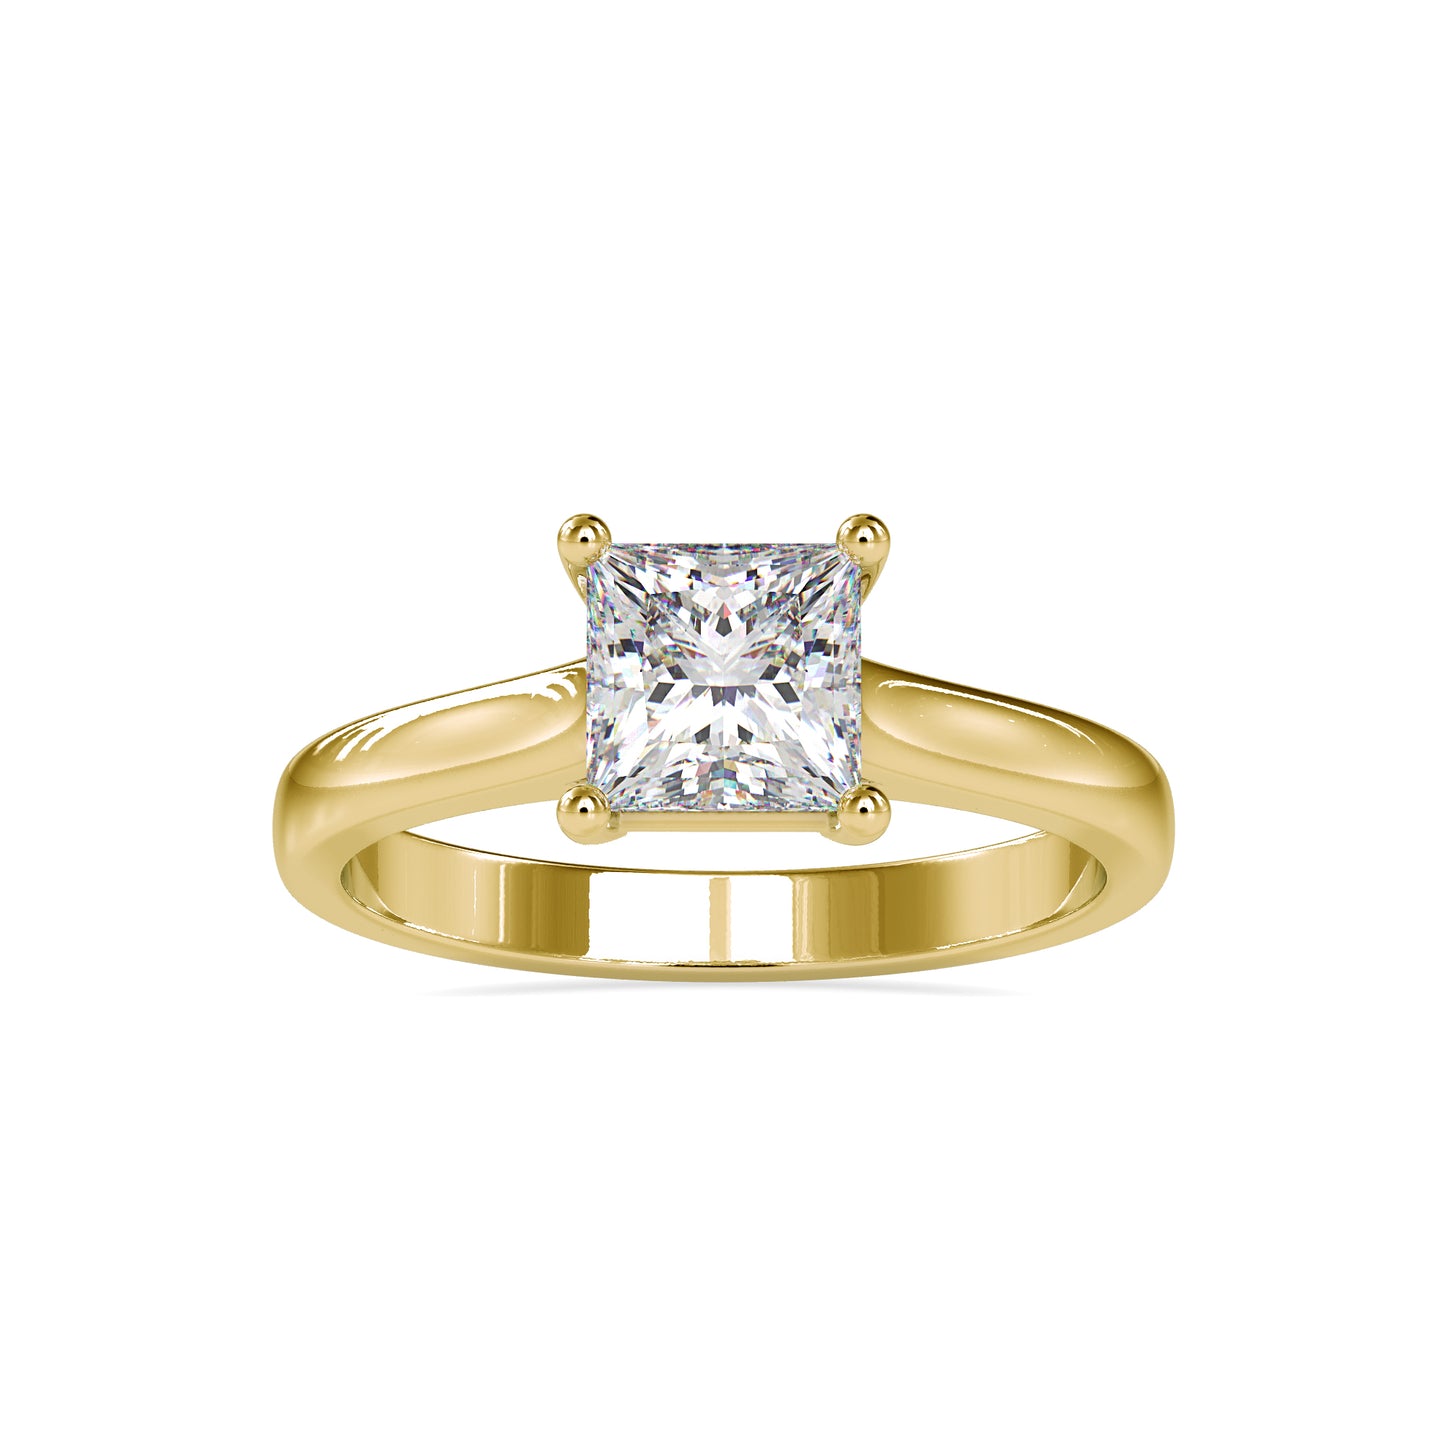 1.35CT Princess Cut Solitaire Diamond Ring